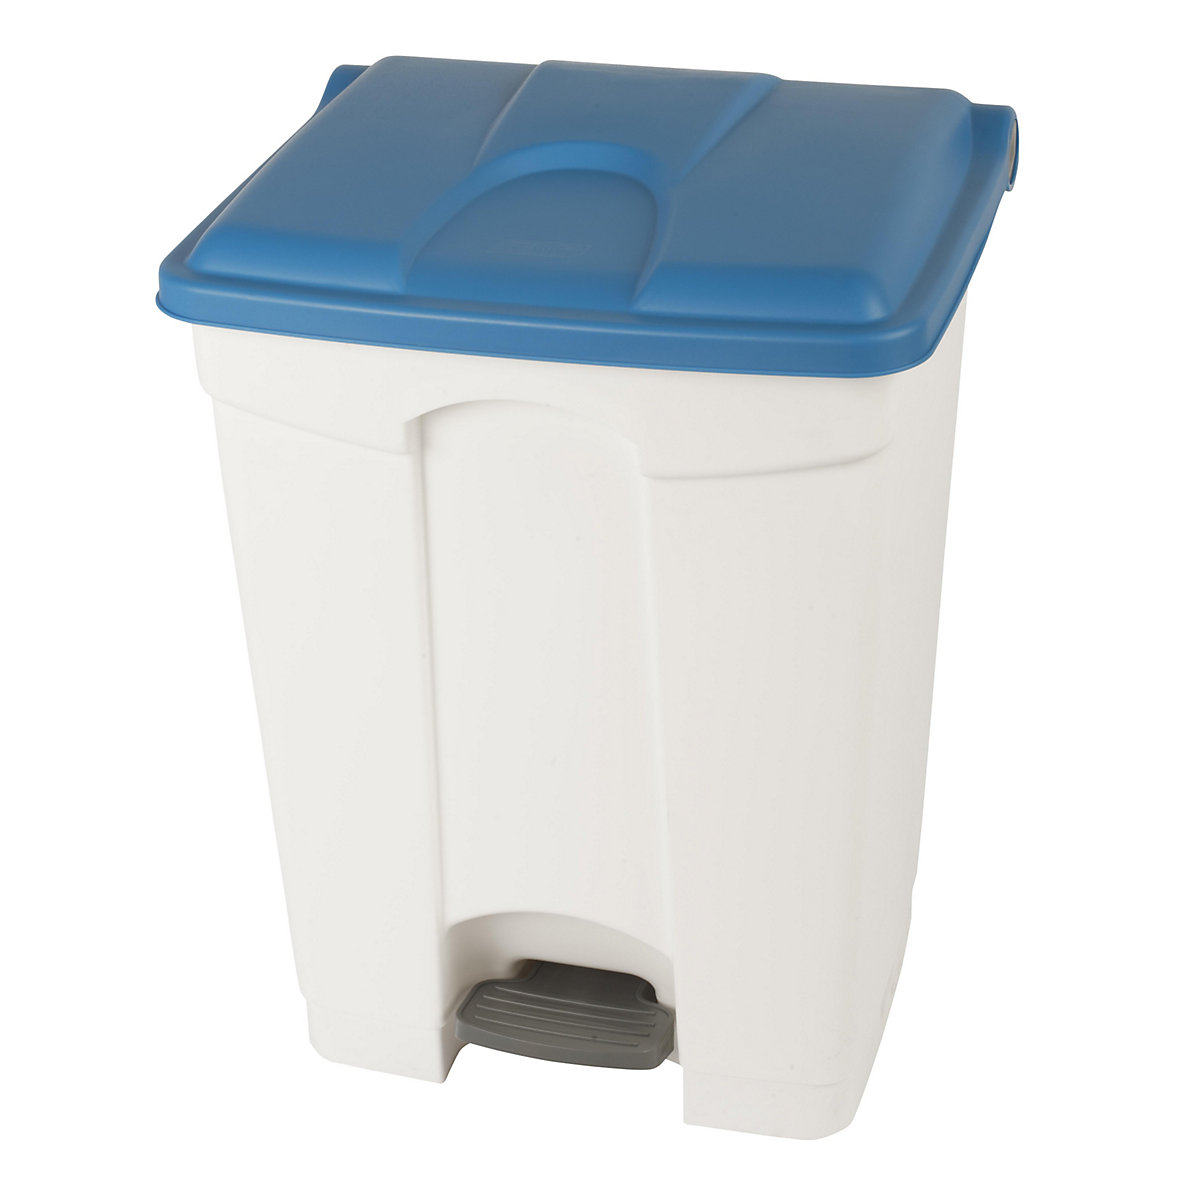 EUROKRAFTbasic – Pedal waste collector, capacity 70 l, WxHxD 505 x 675 x 415 mm, white, blue lid